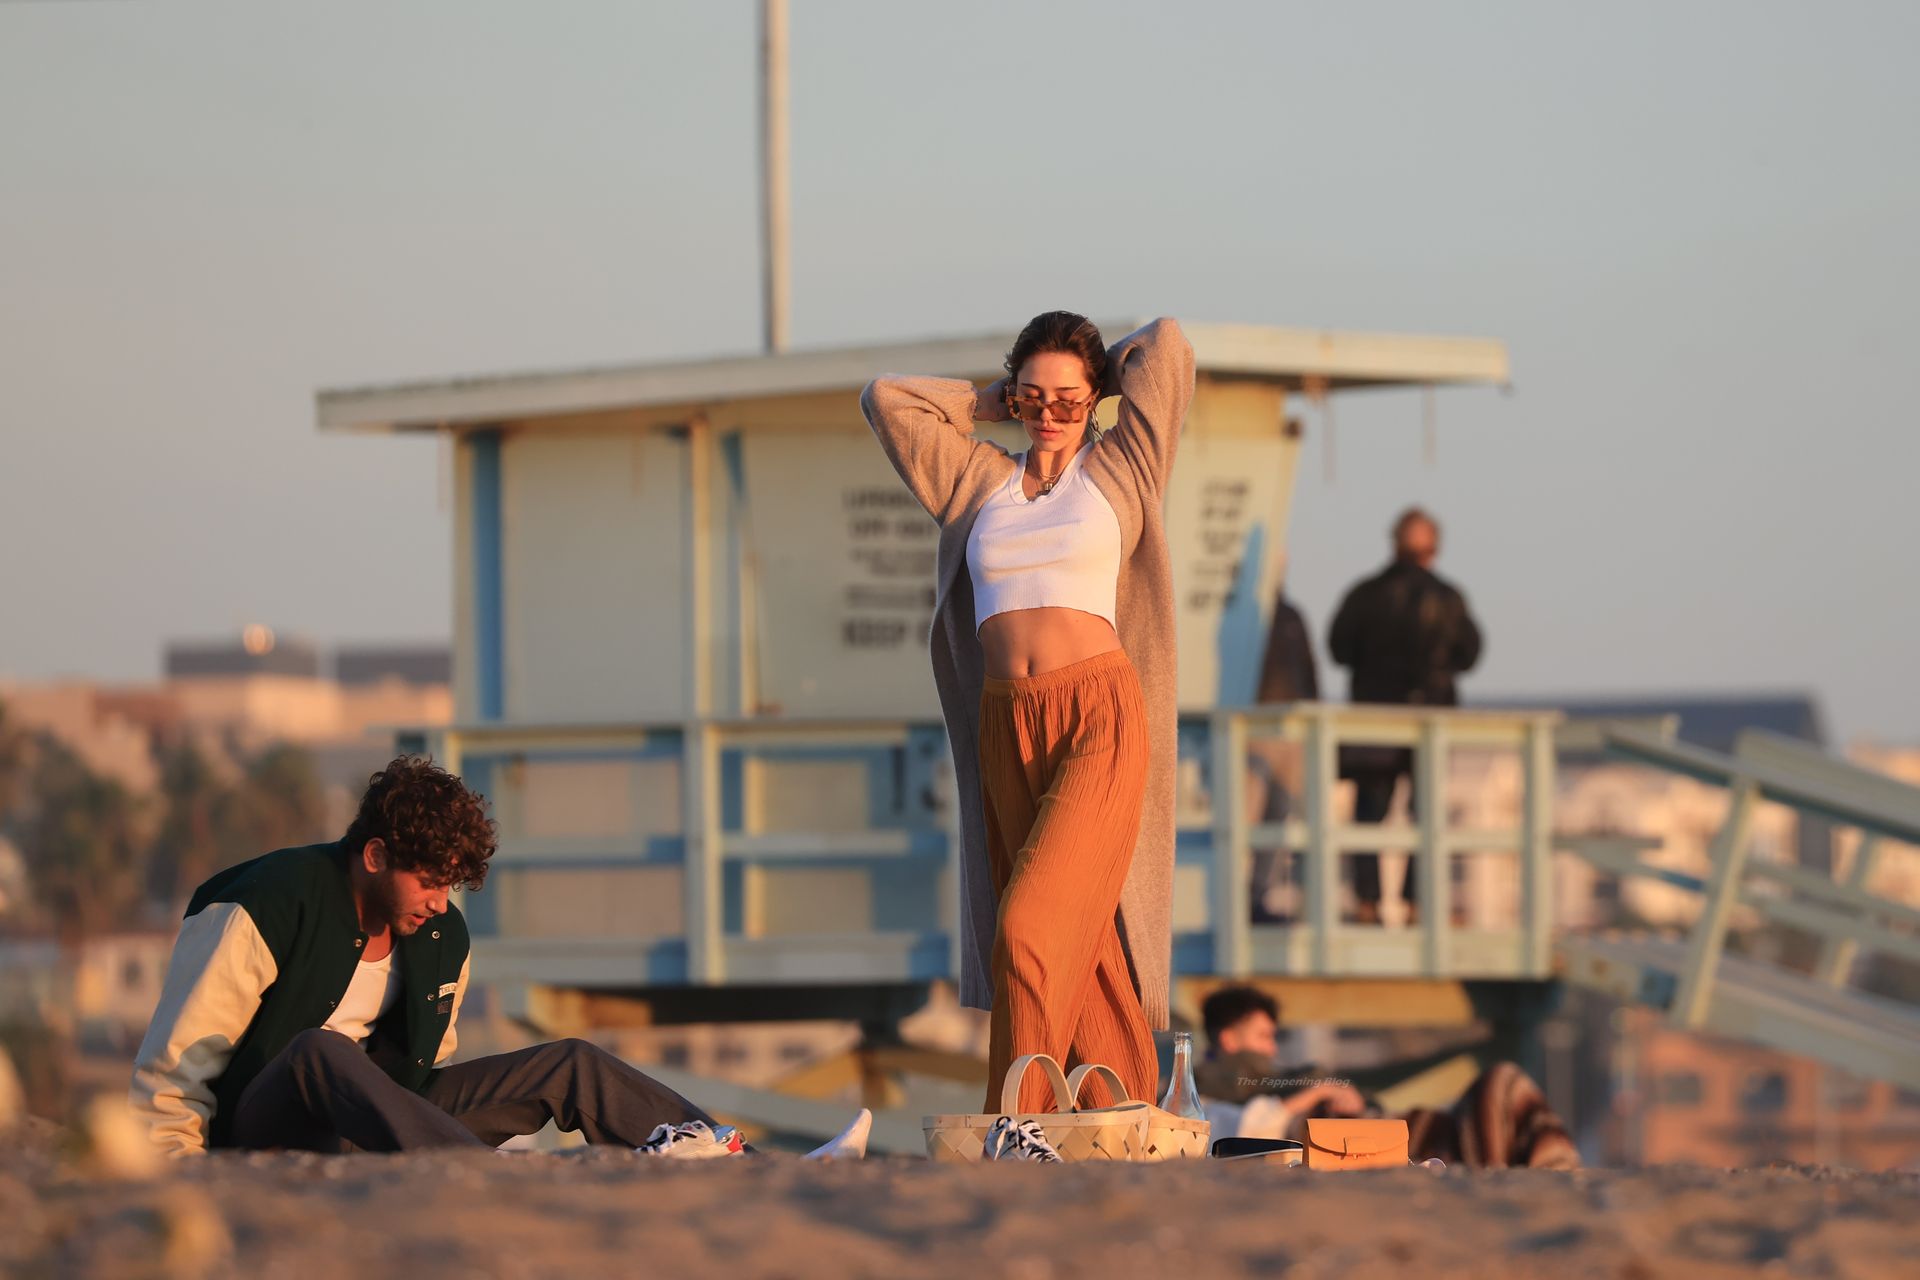 Delilah Belle Hamlin  Eyal Booker Enjoy a Day on the Beach (67 Photos)